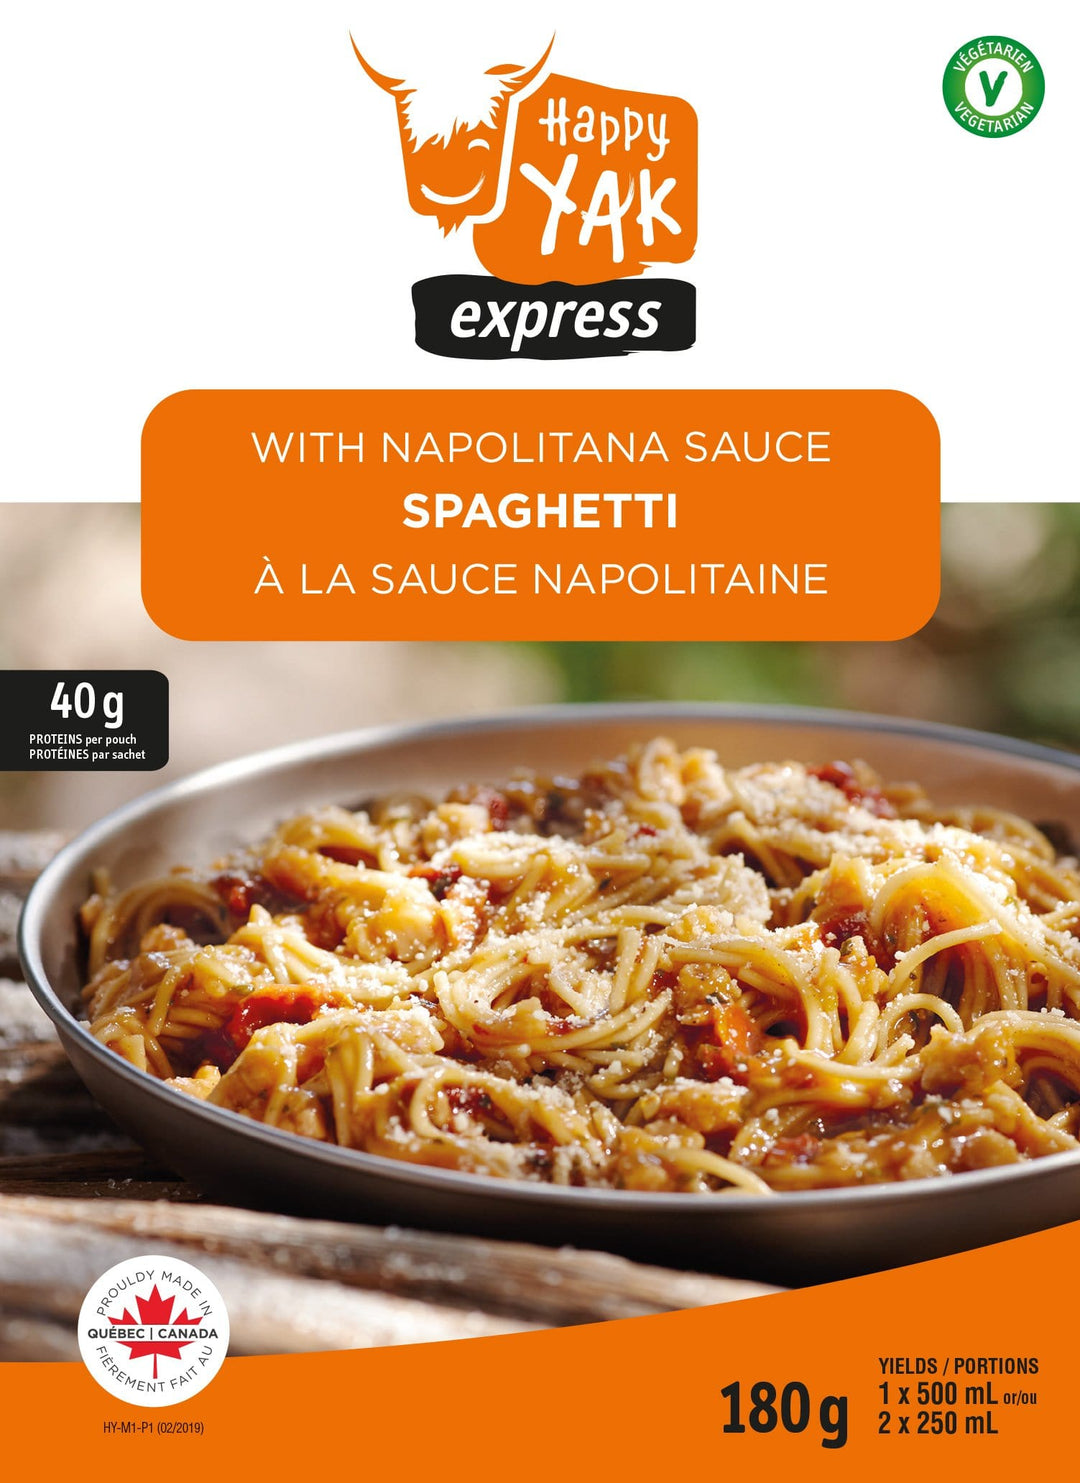 Happy Yak Neapolitan Spaghetti in Savoury Sundried Tomato Sauce - 1 Portion